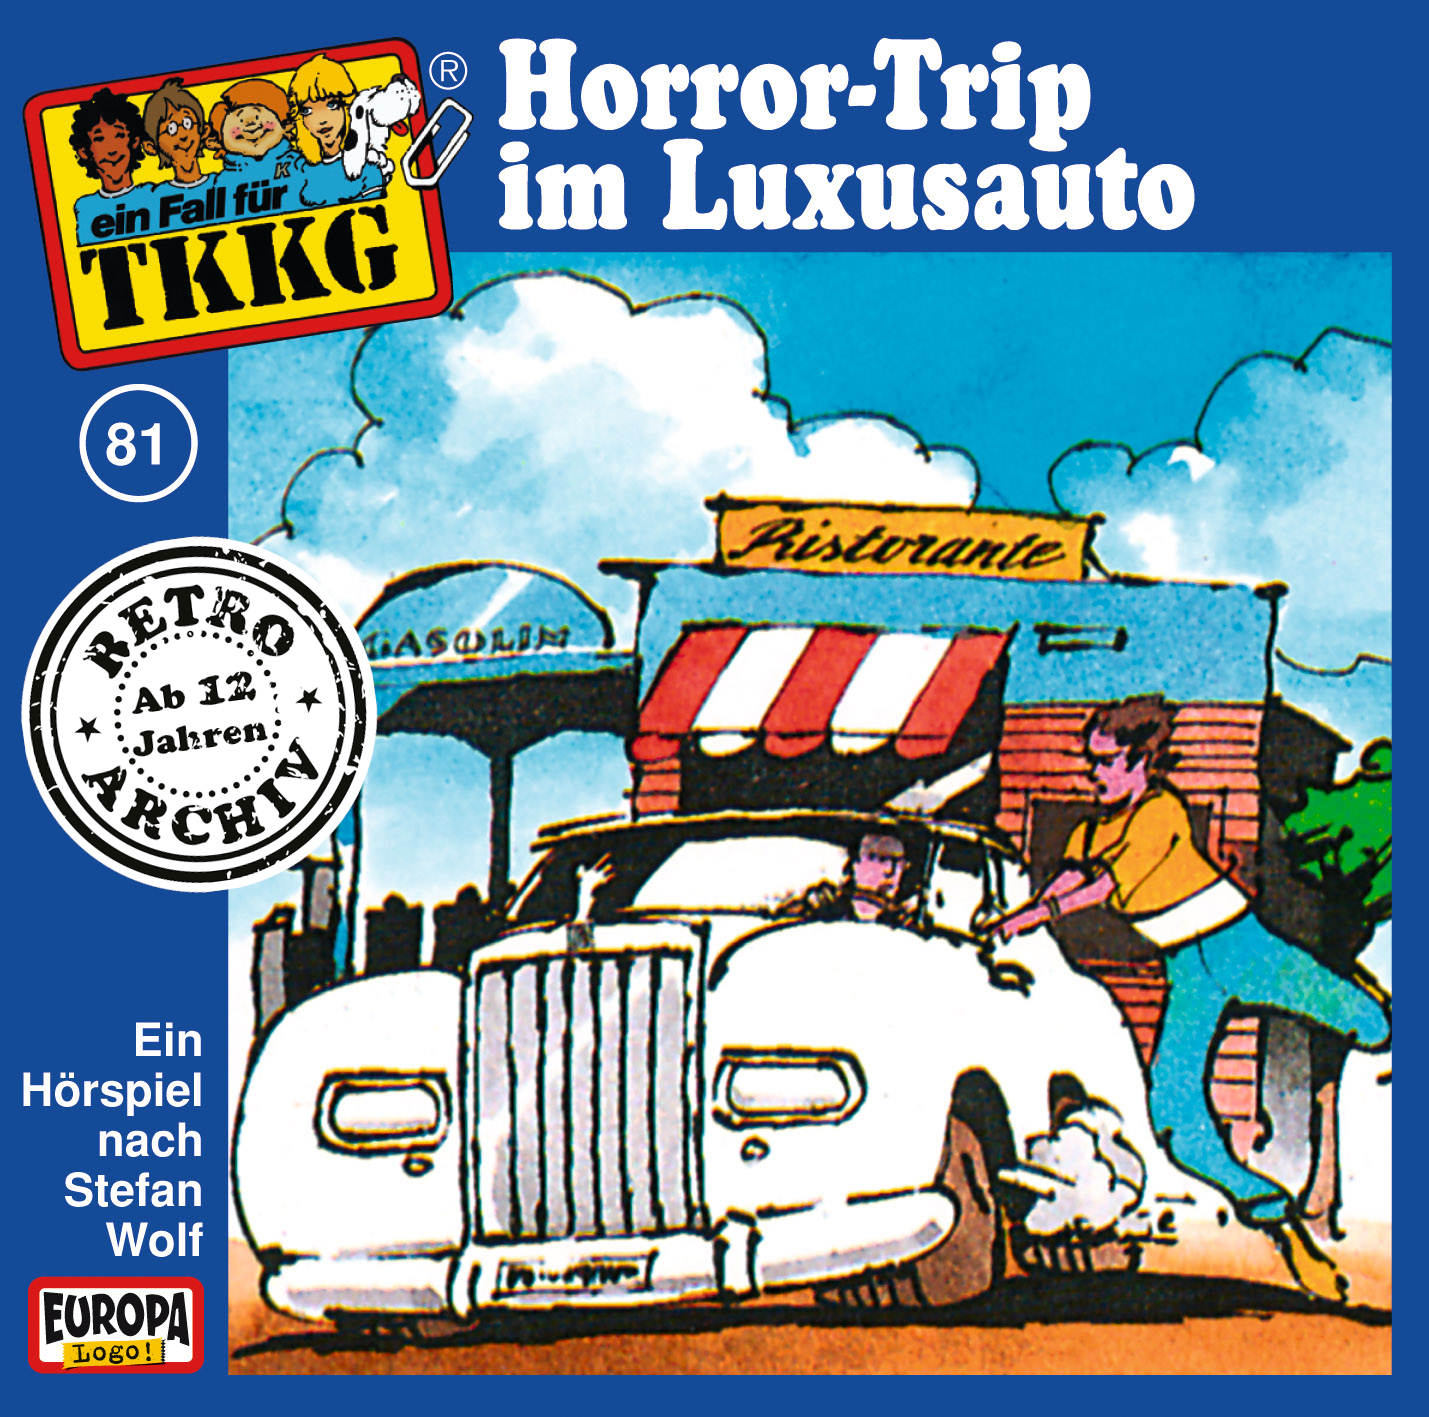 TKKG Retro-Archiv: Horror-Trip im Luxusauto